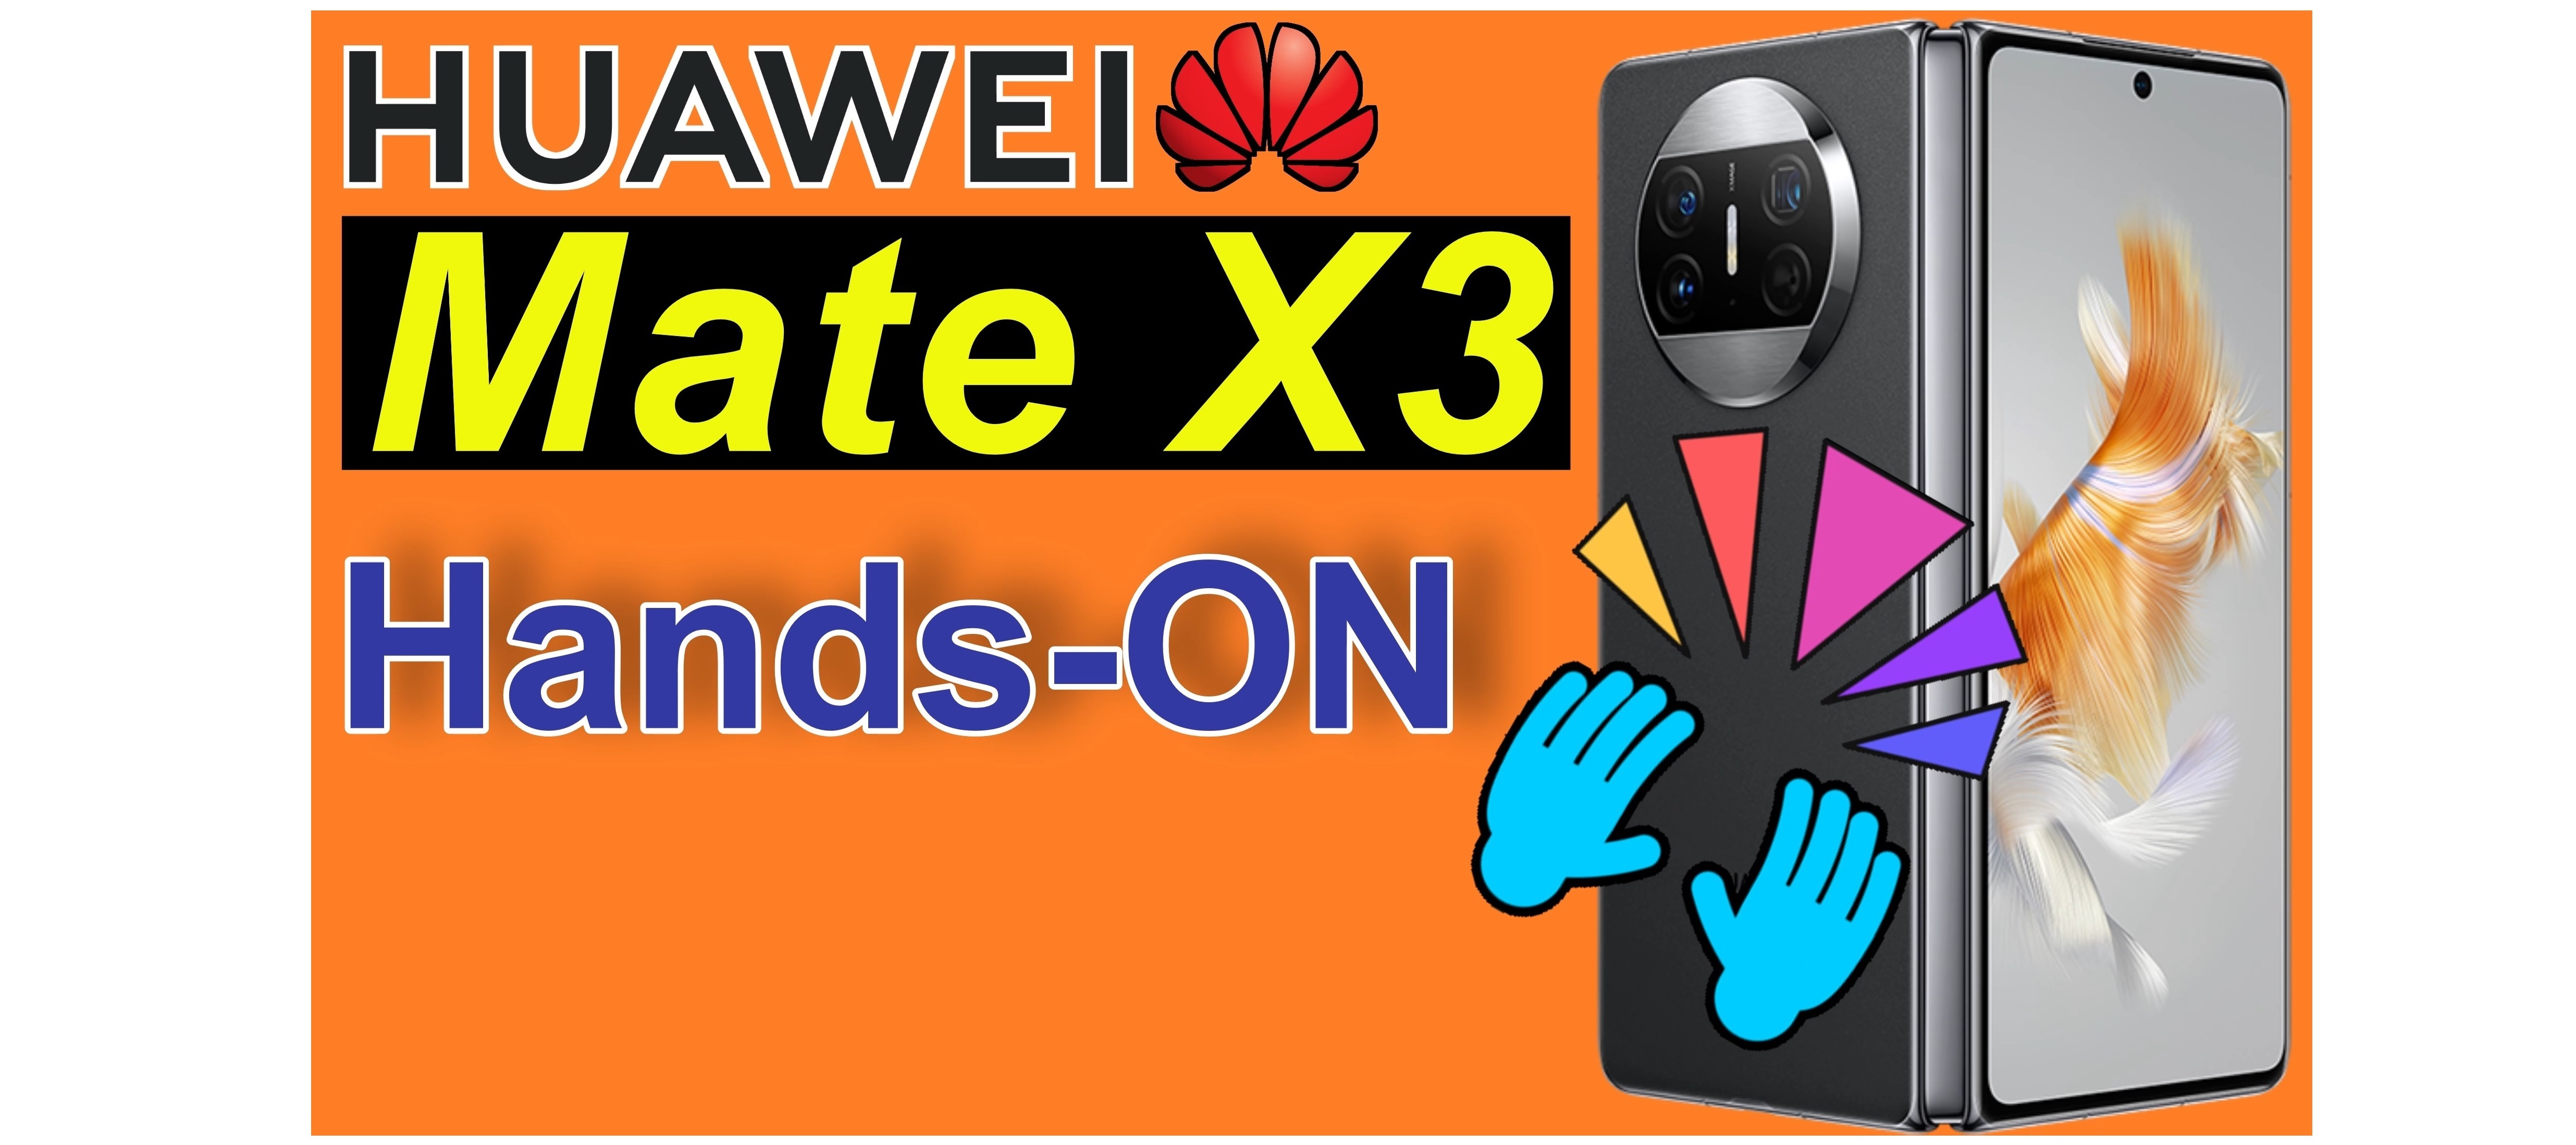 Huawei Mate X3 - Hands-ON und mein letztes Video...